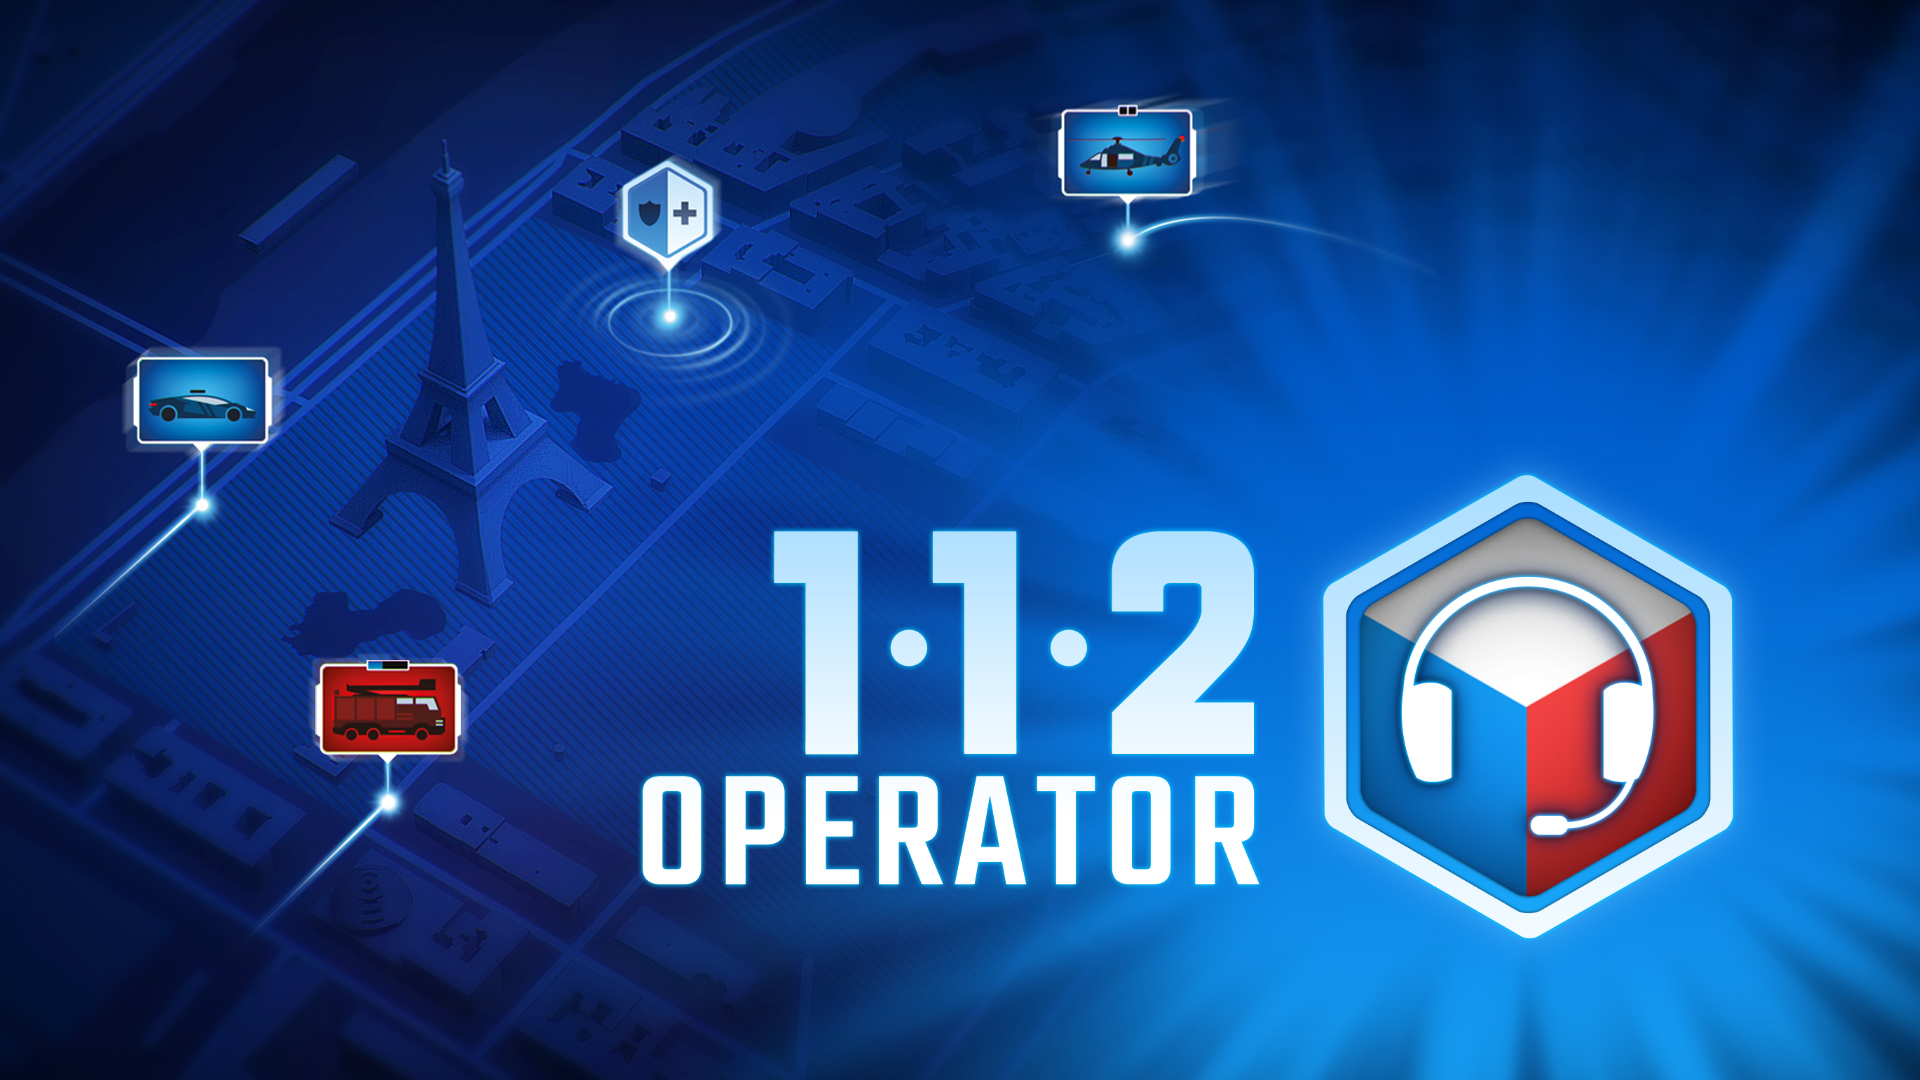 112 operator console commands